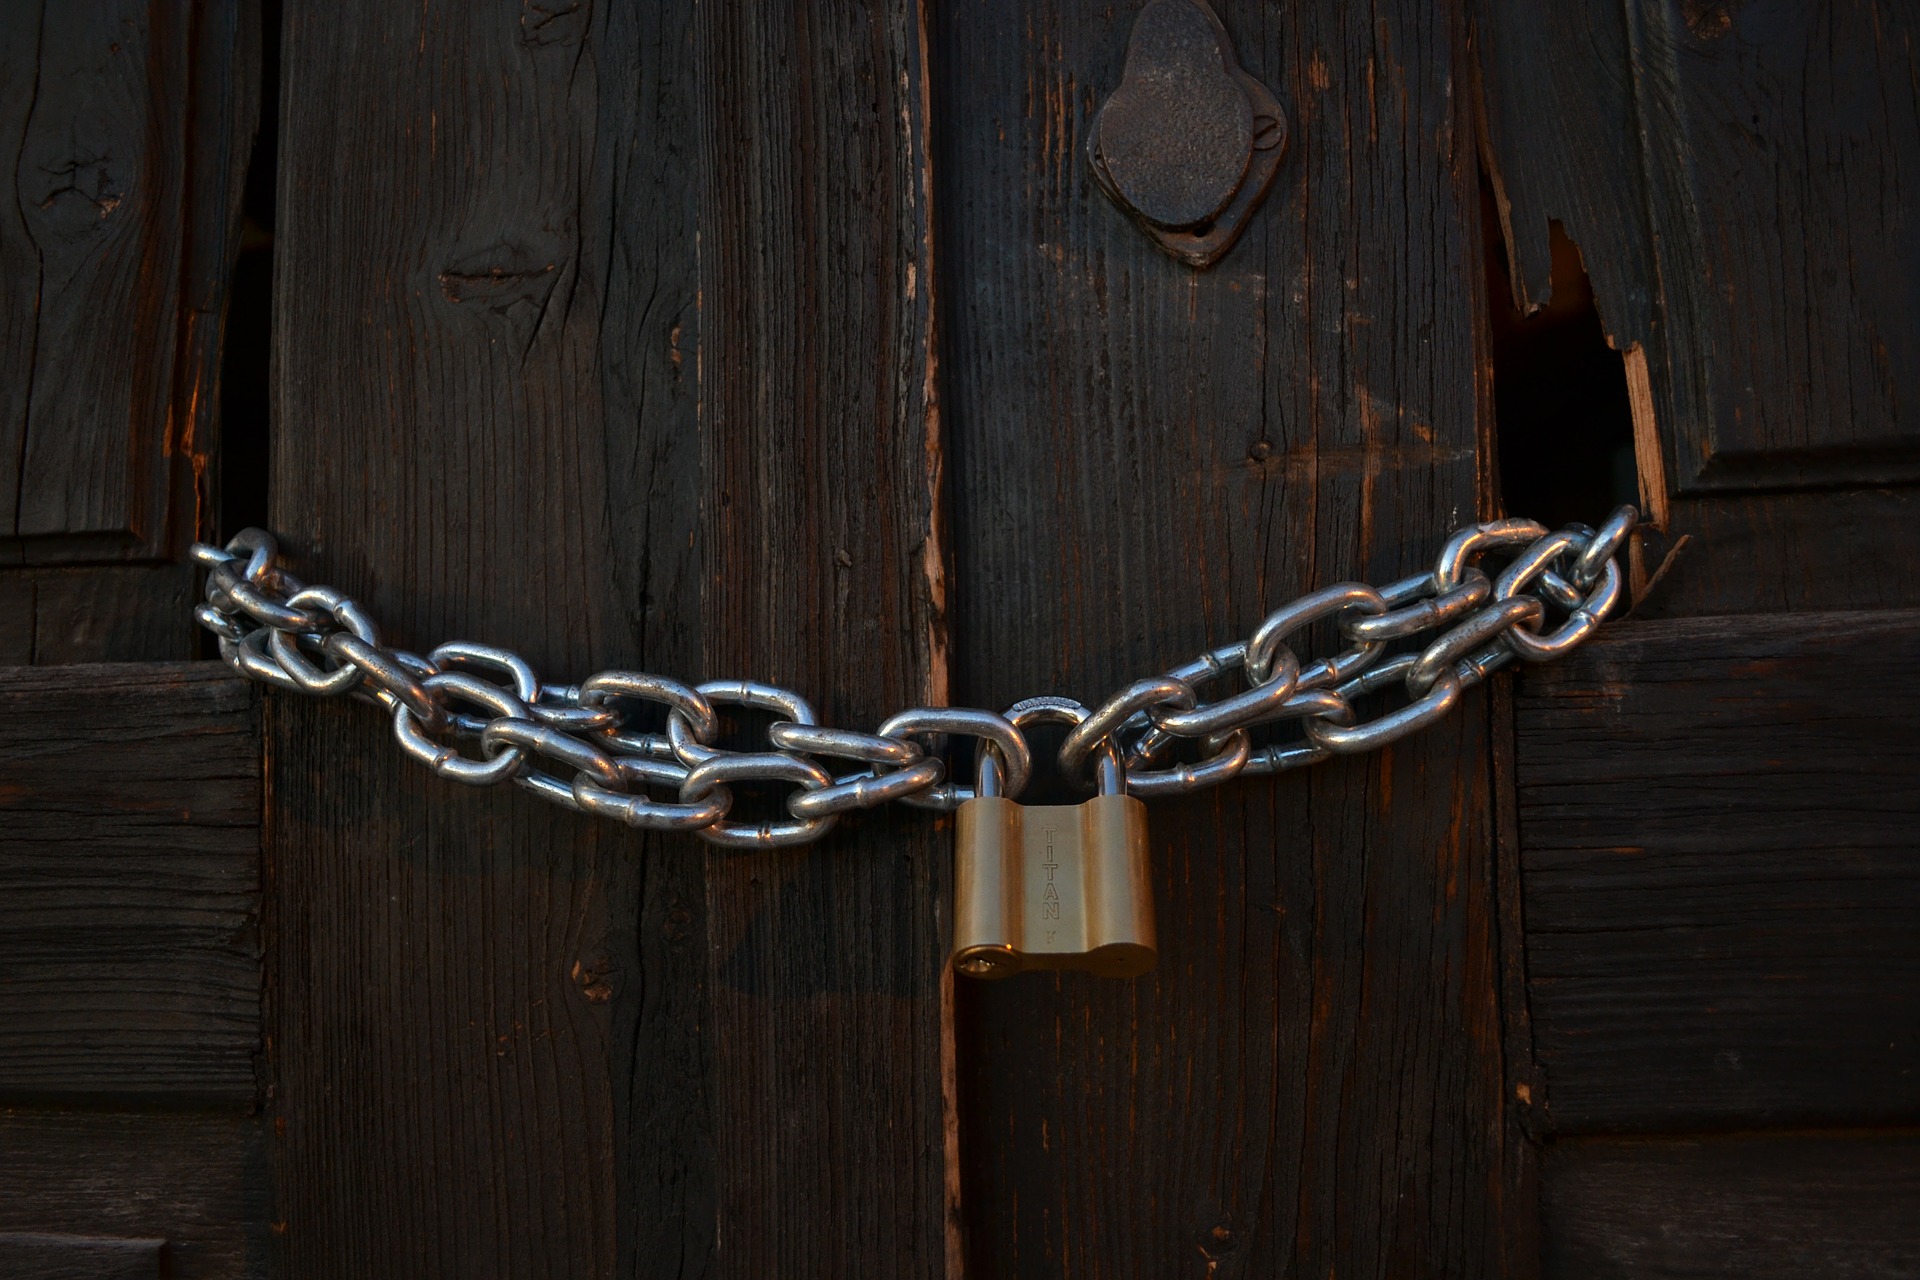 Locksmithing: Behind the Locked Door